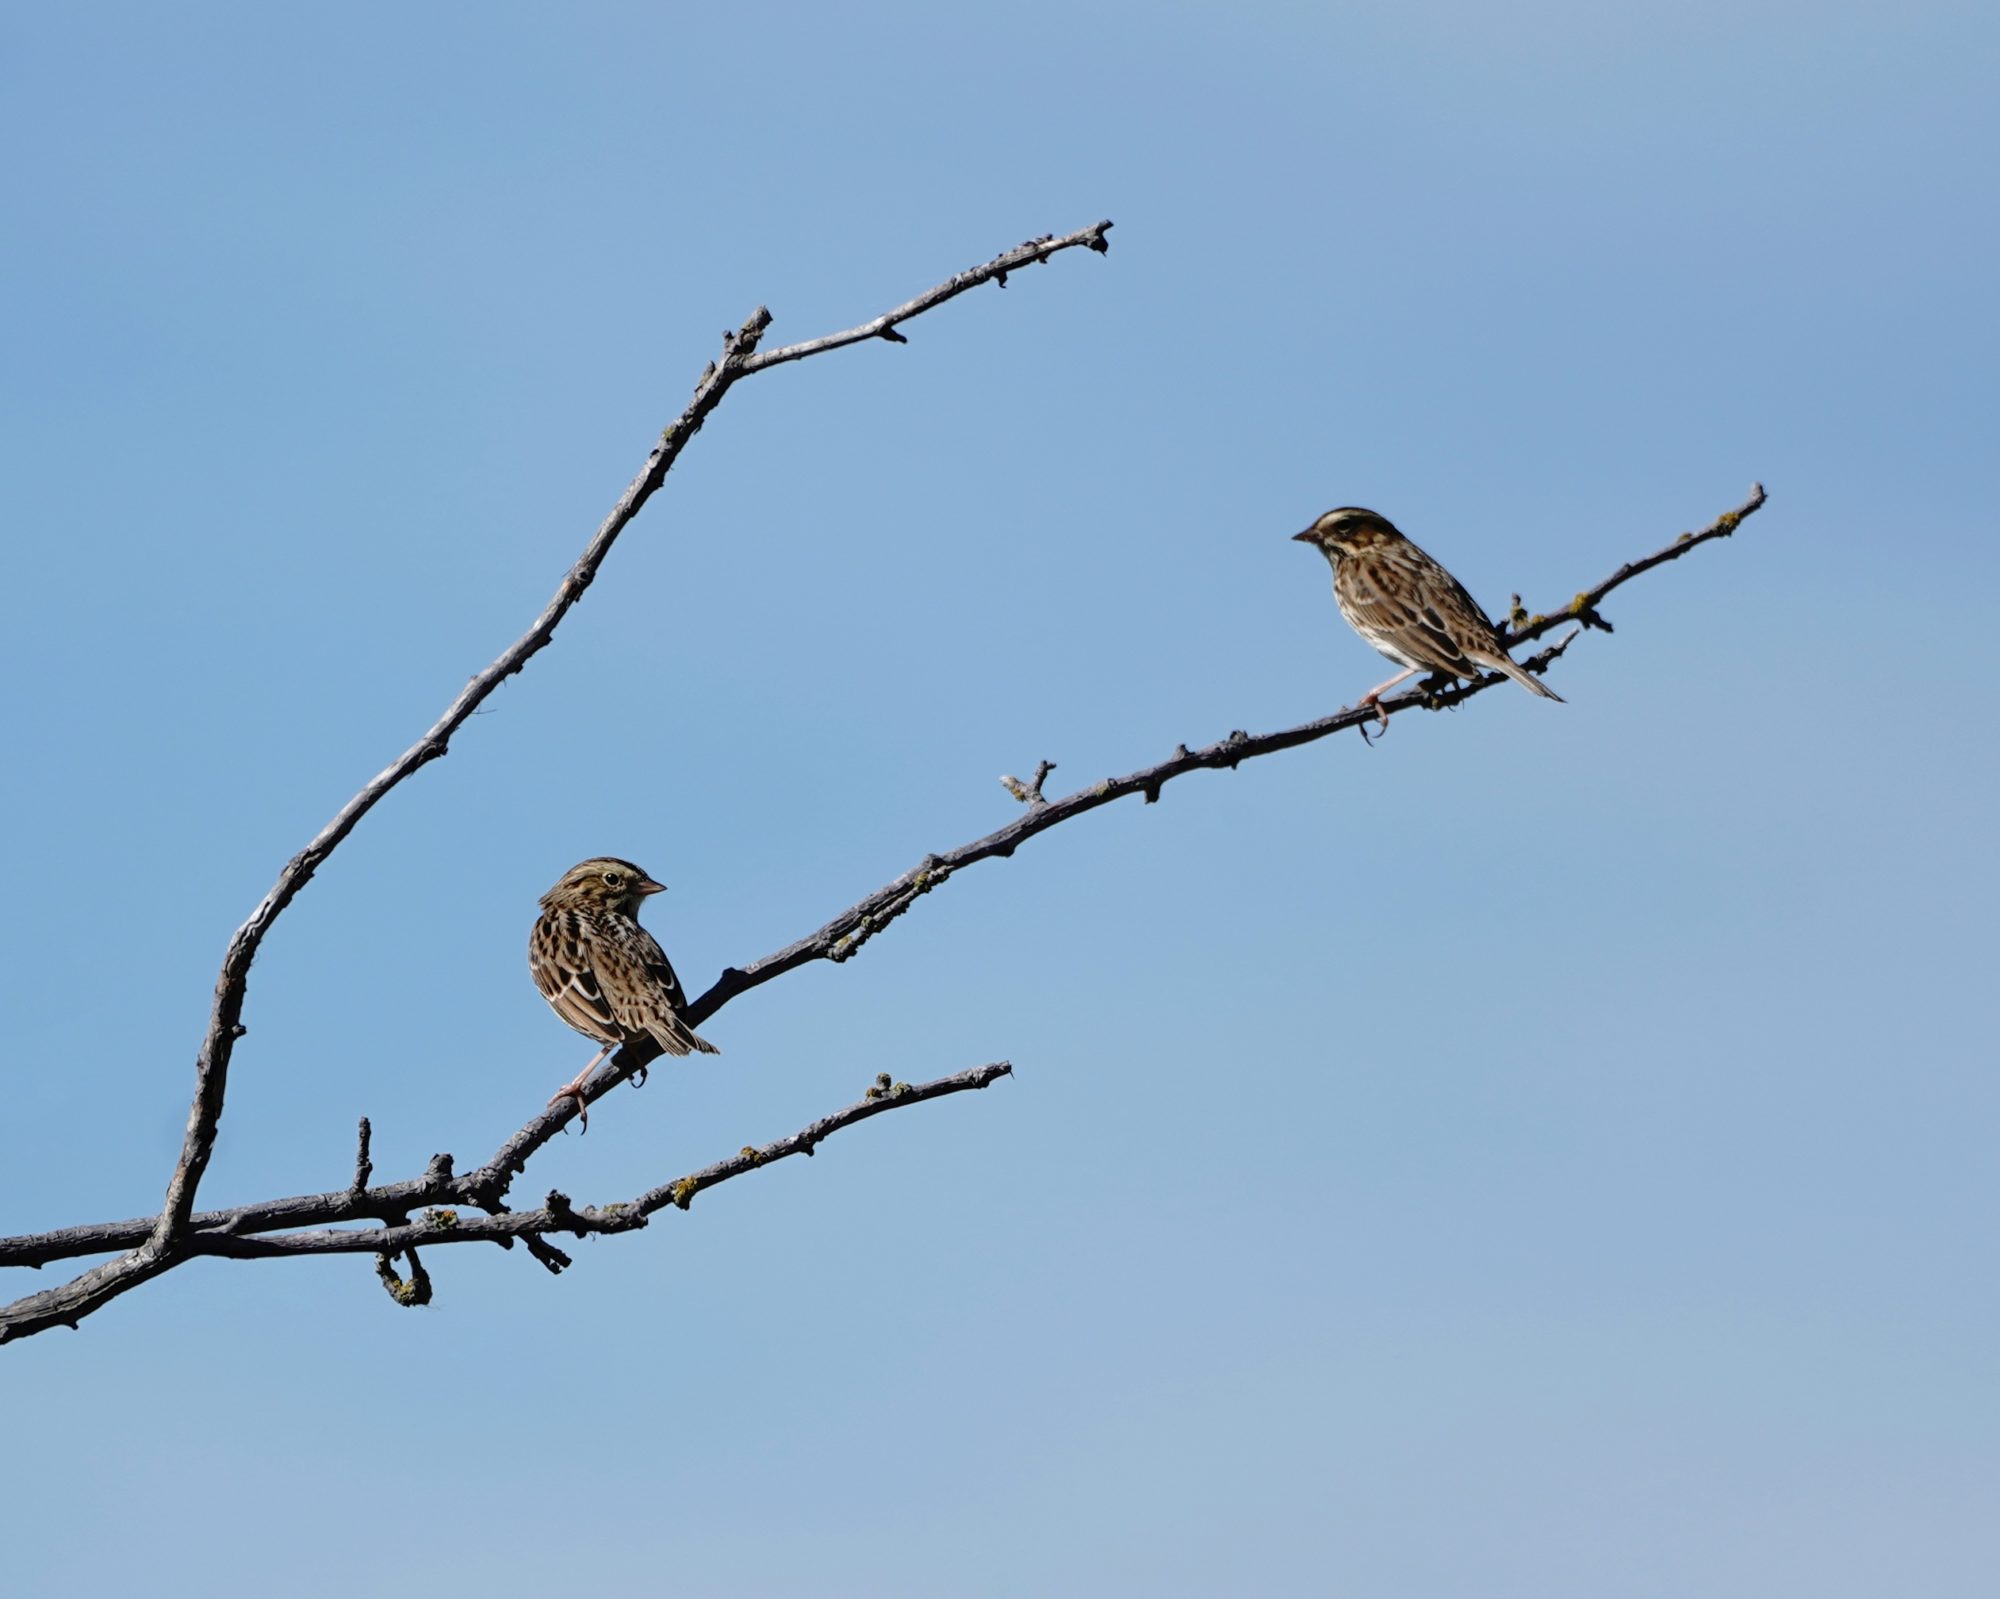 Two Savannah Sparrows